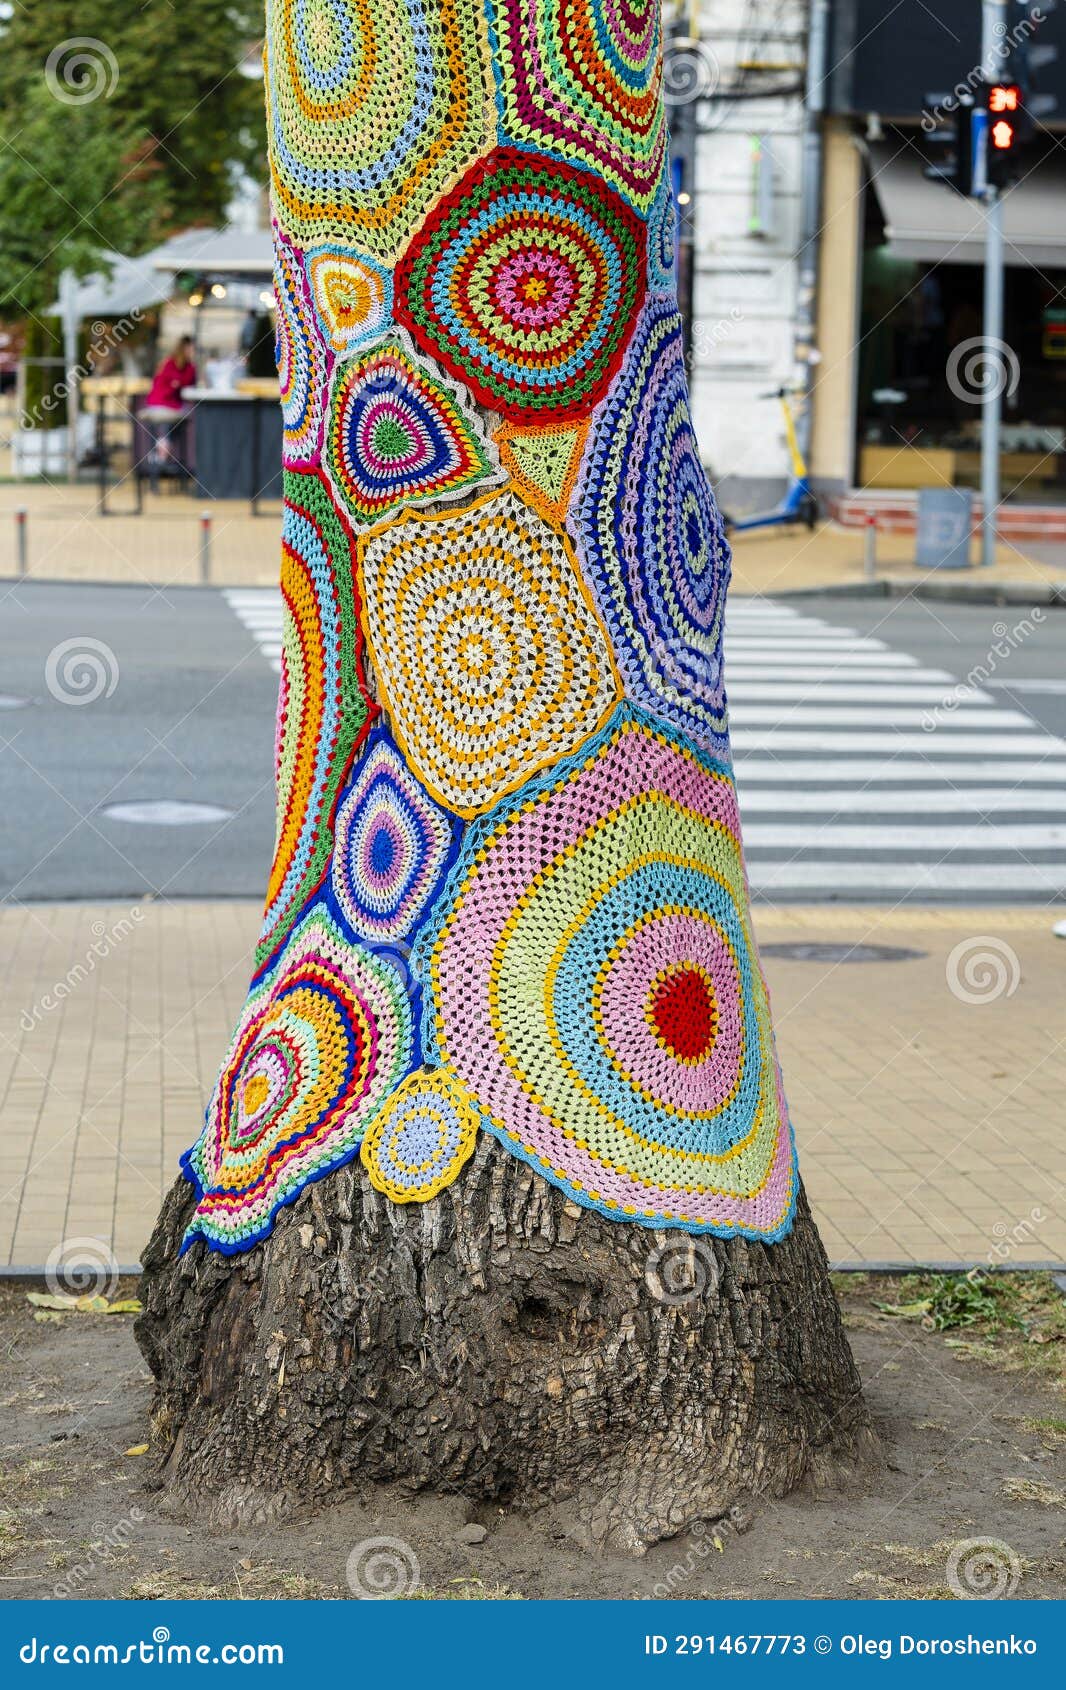 https://thumbs.dreamstime.com/z/colorful-crochet-knit-tree-trunk-kyiv-ukraine-street-art-goes-different-names-graffiti-knitting-yarn-bombing-abstract-291467773.jpg